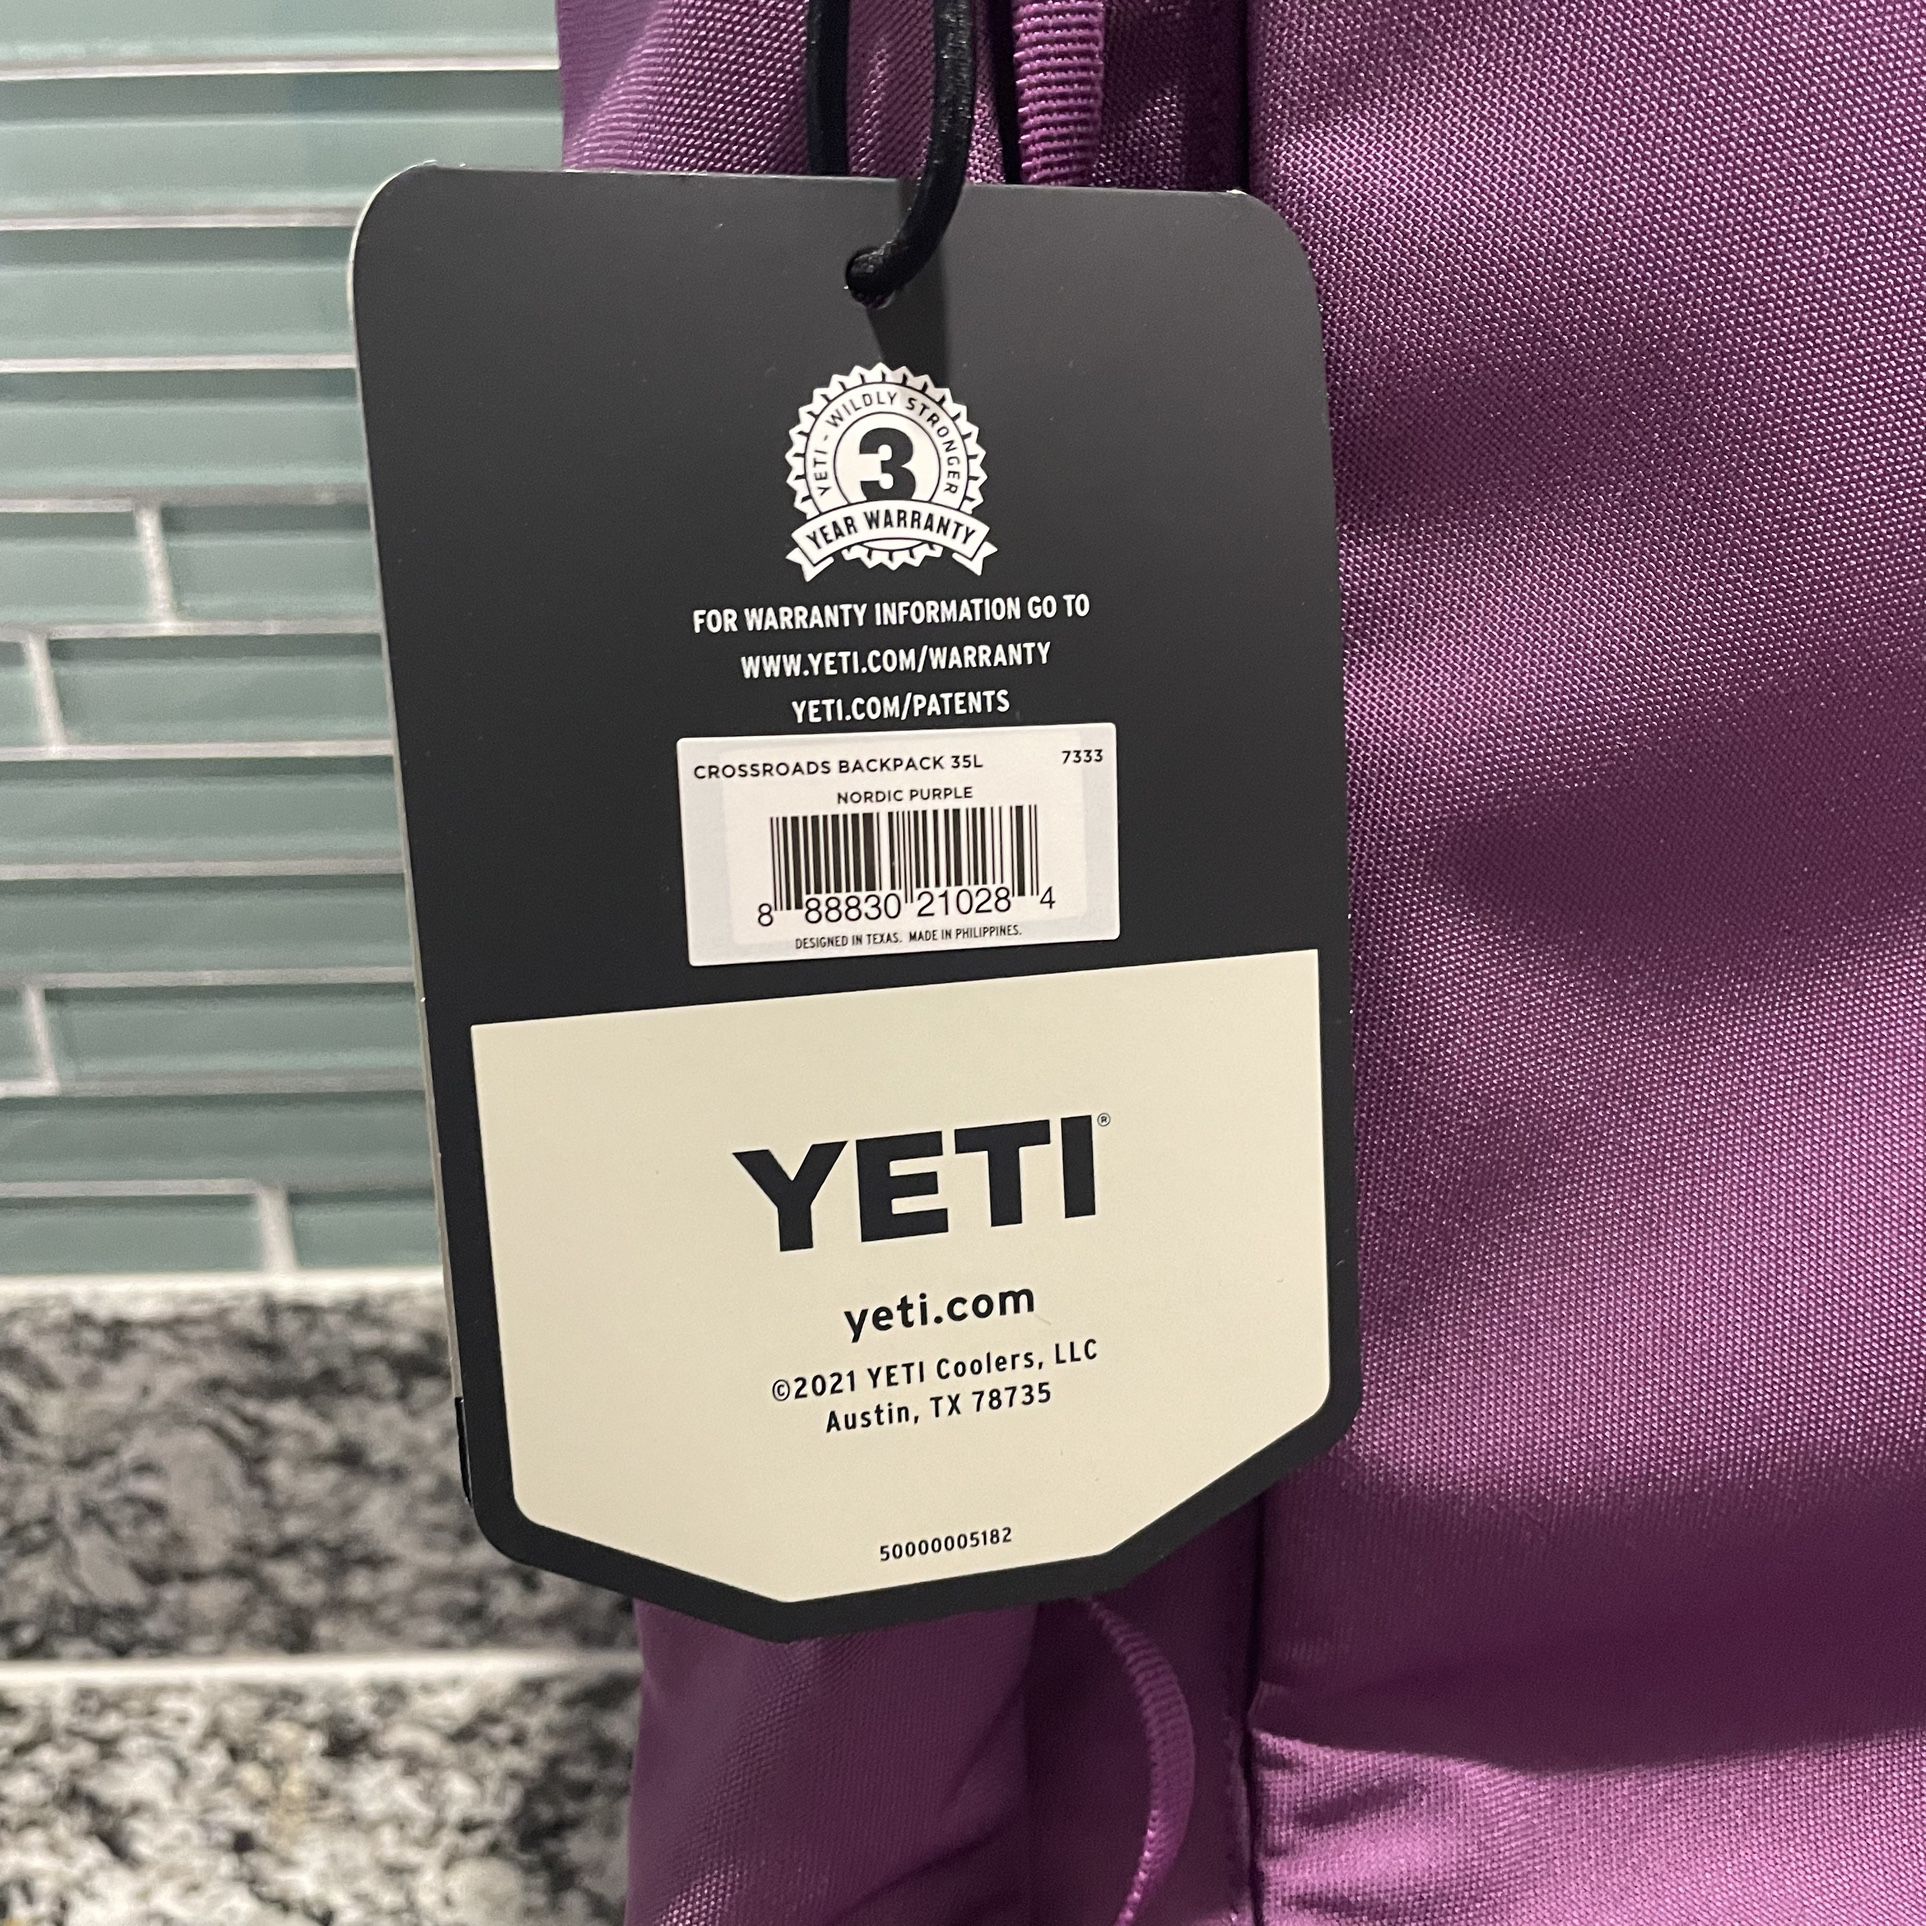 YETI Crossroads 35L Nordic Purple Travel Backpack | Brand New W/ Tags